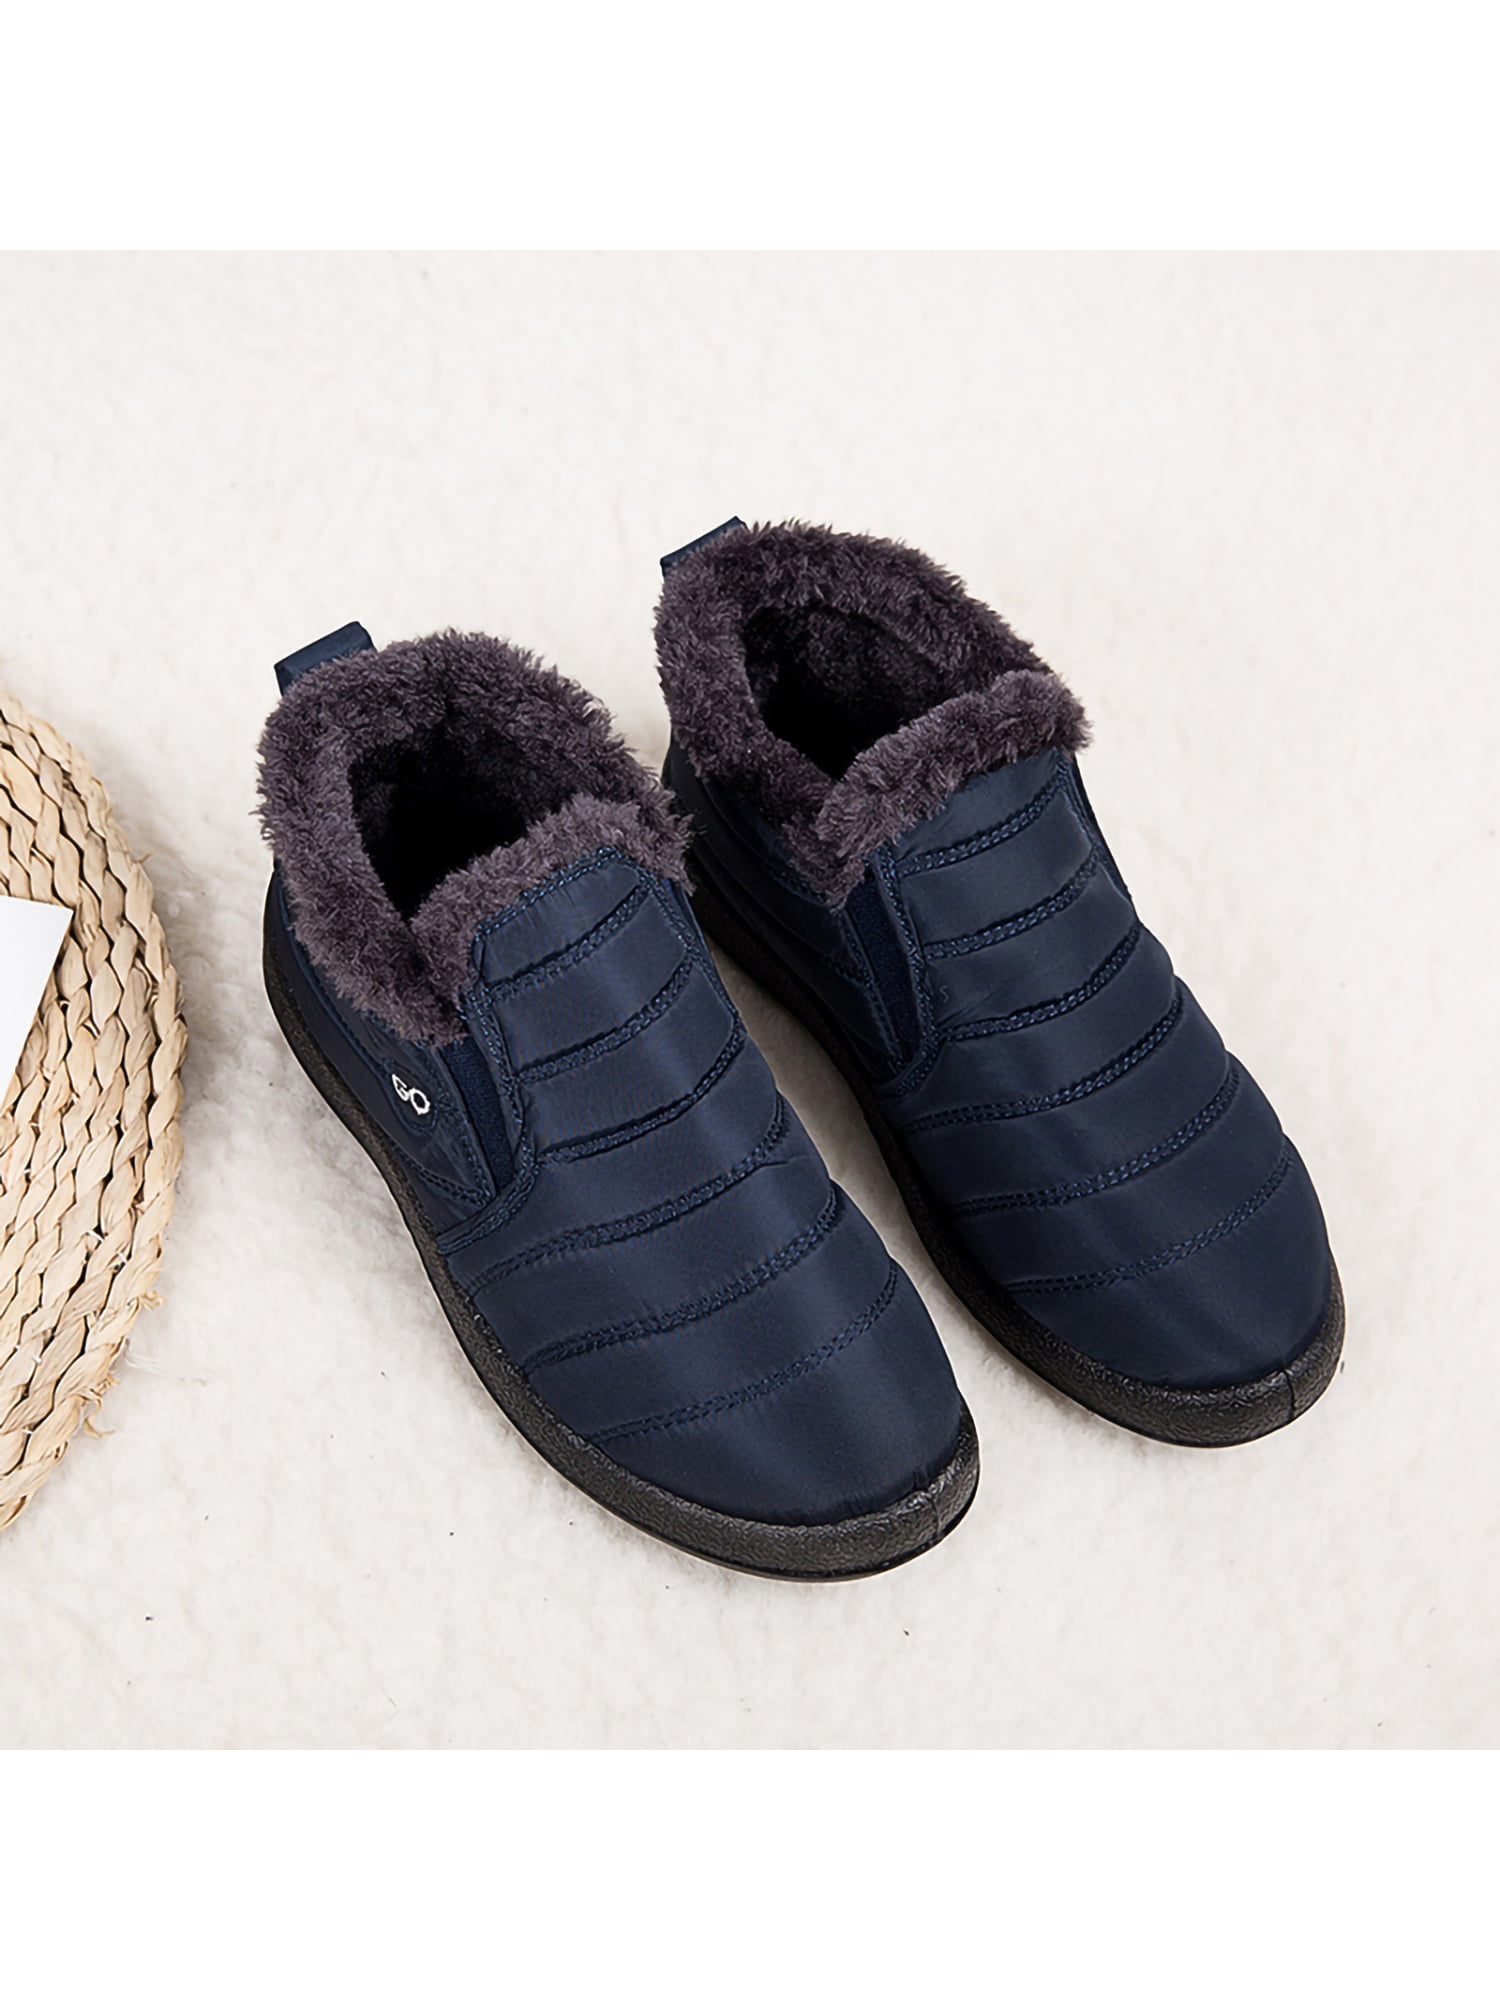 SAGUARO Men's Women's Ankle Snow Boots Winter Warm Fur-lined Slip On Shoes 